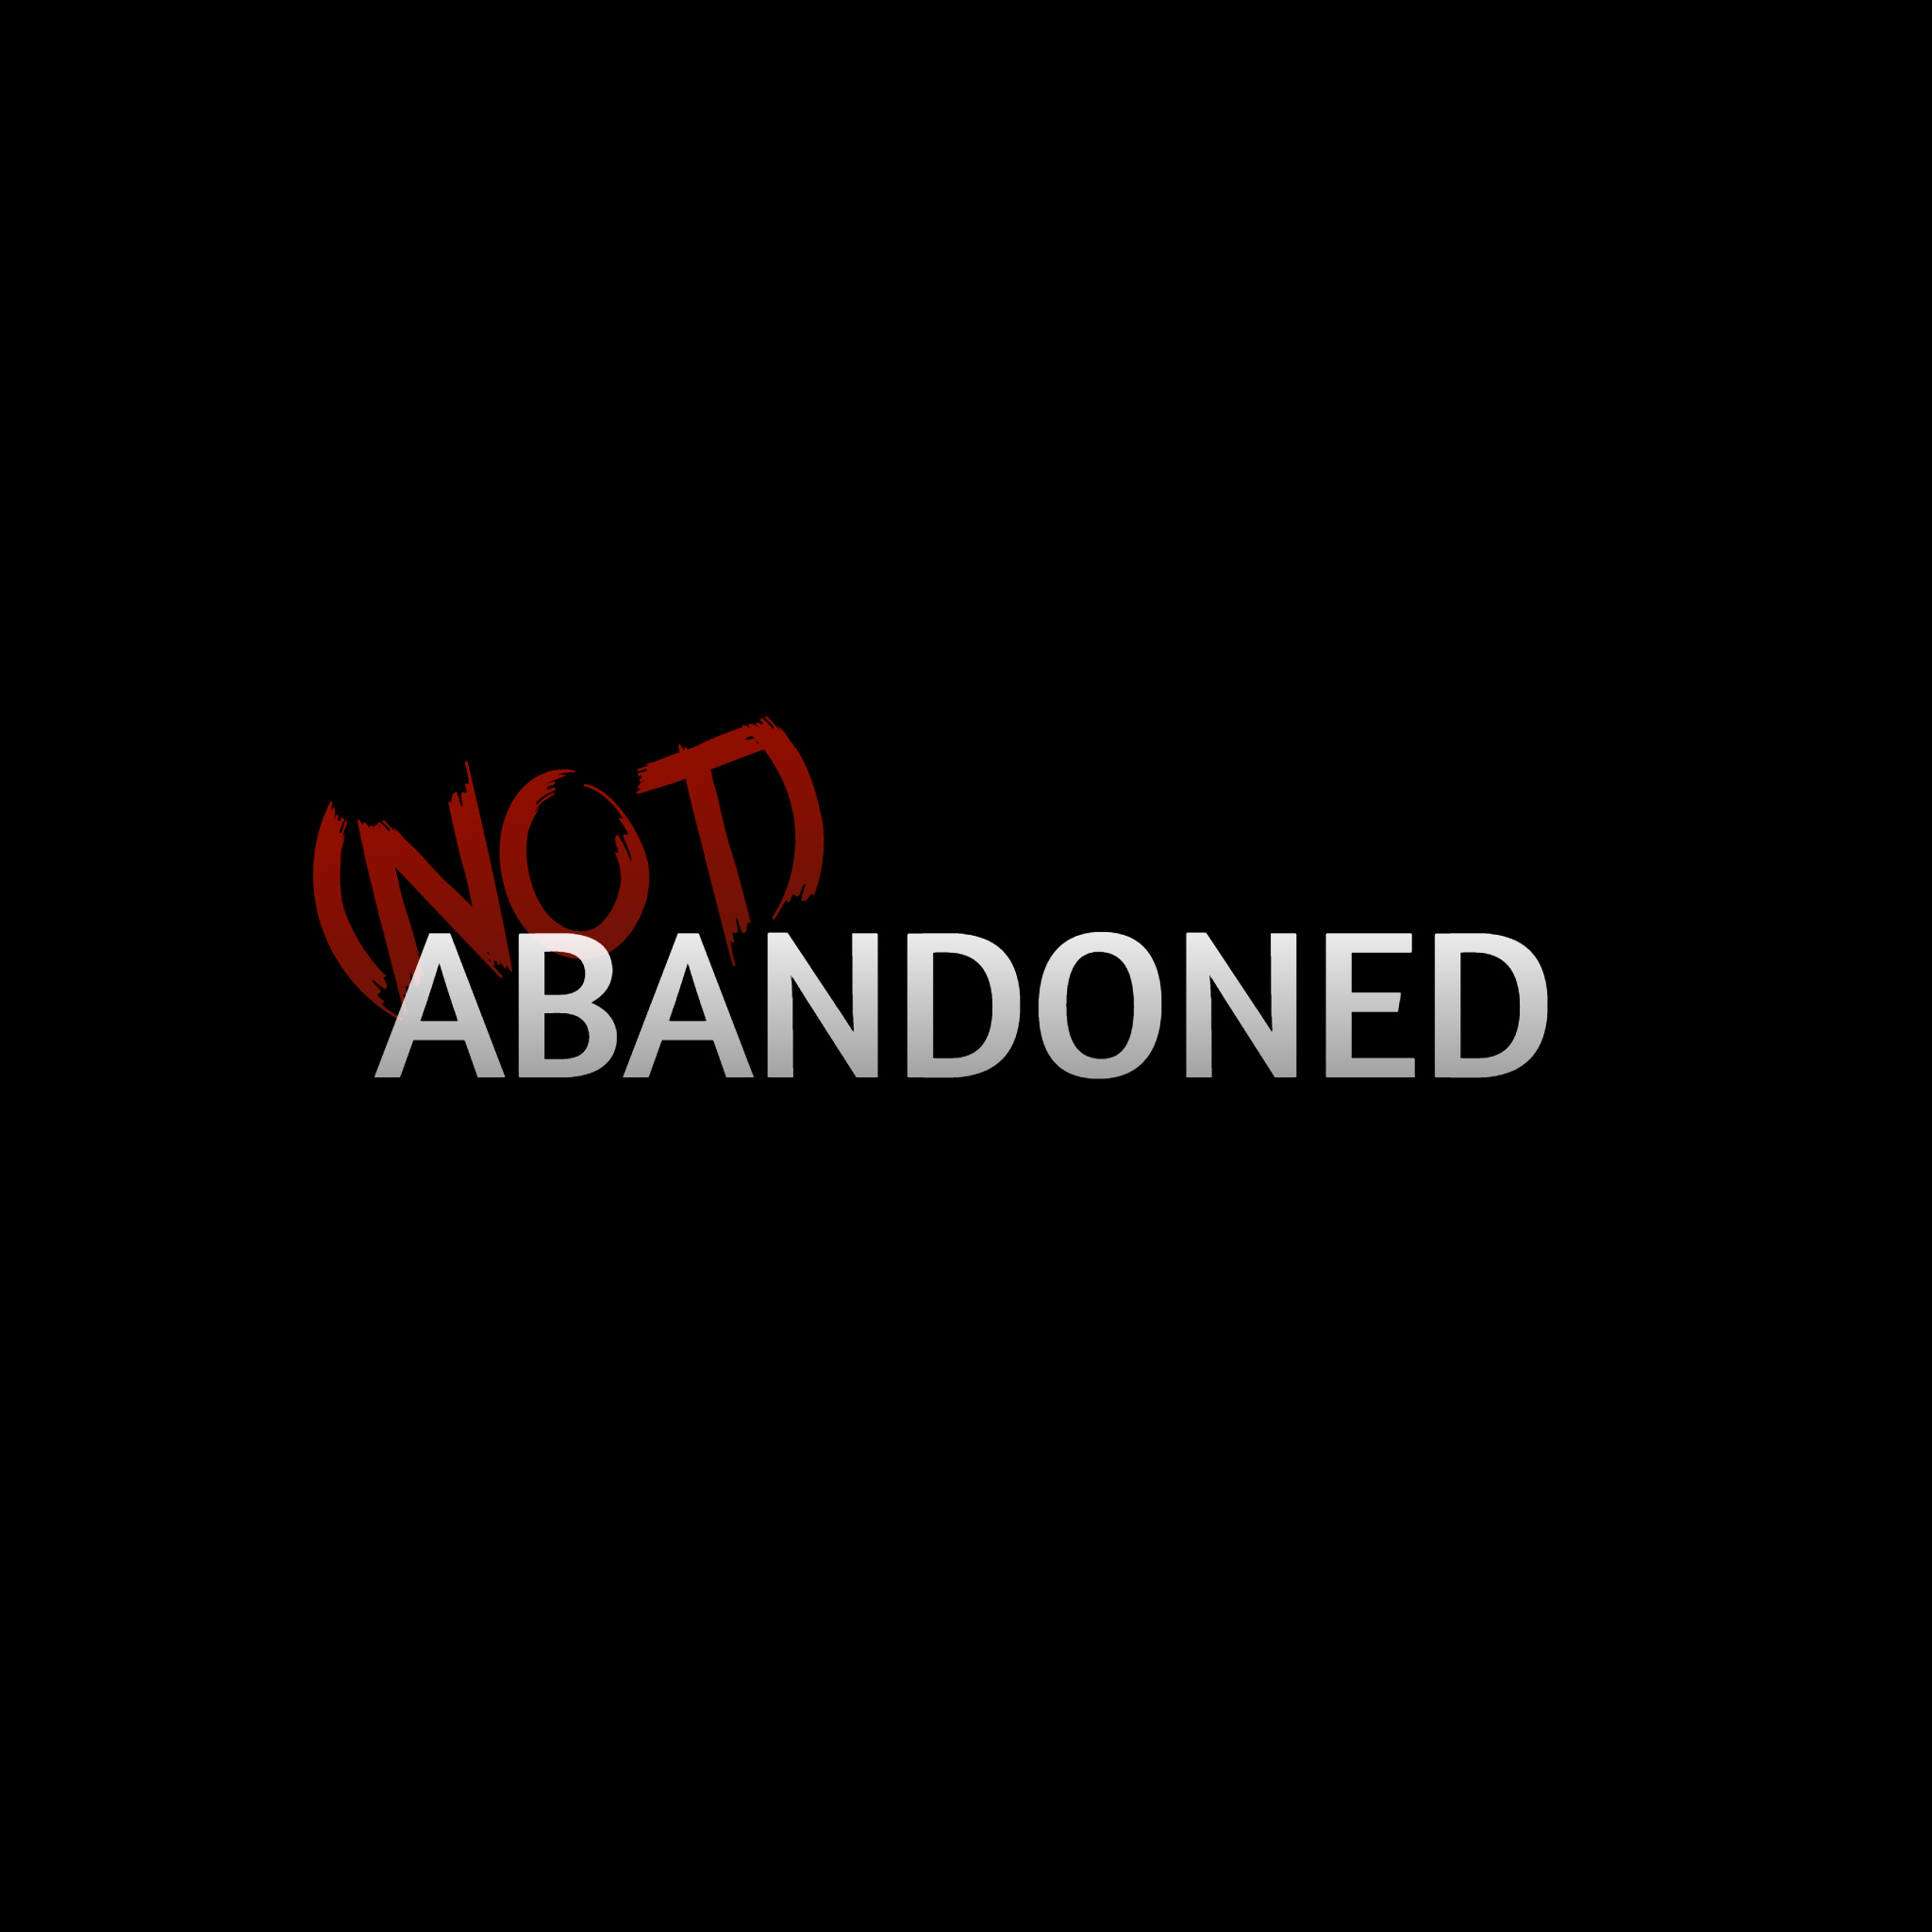 (Not) Abandoned